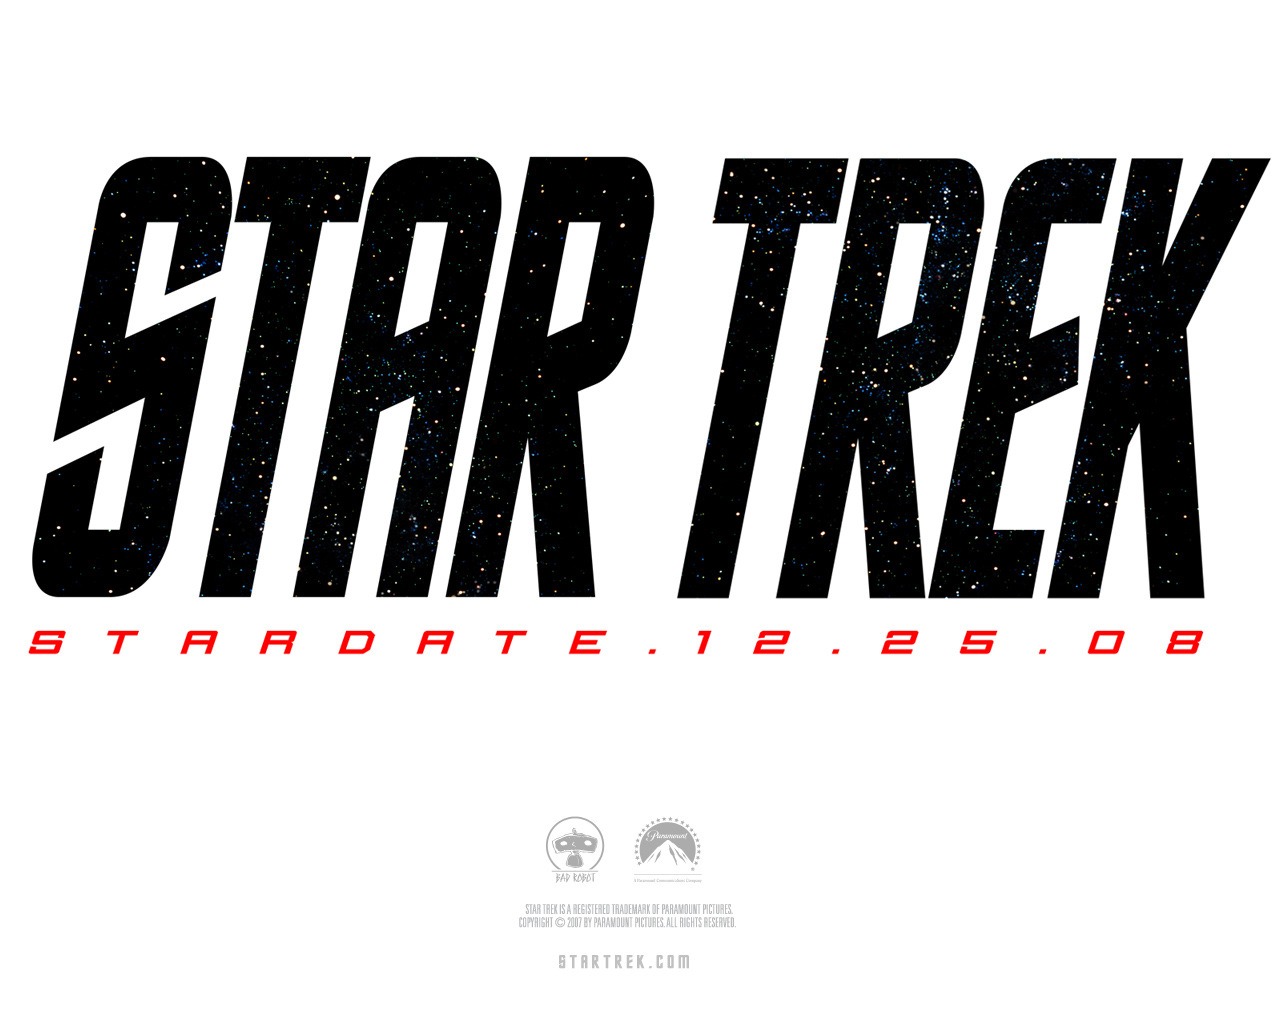 Fondos de escritorio de Star Trek #8 - 1280x1024